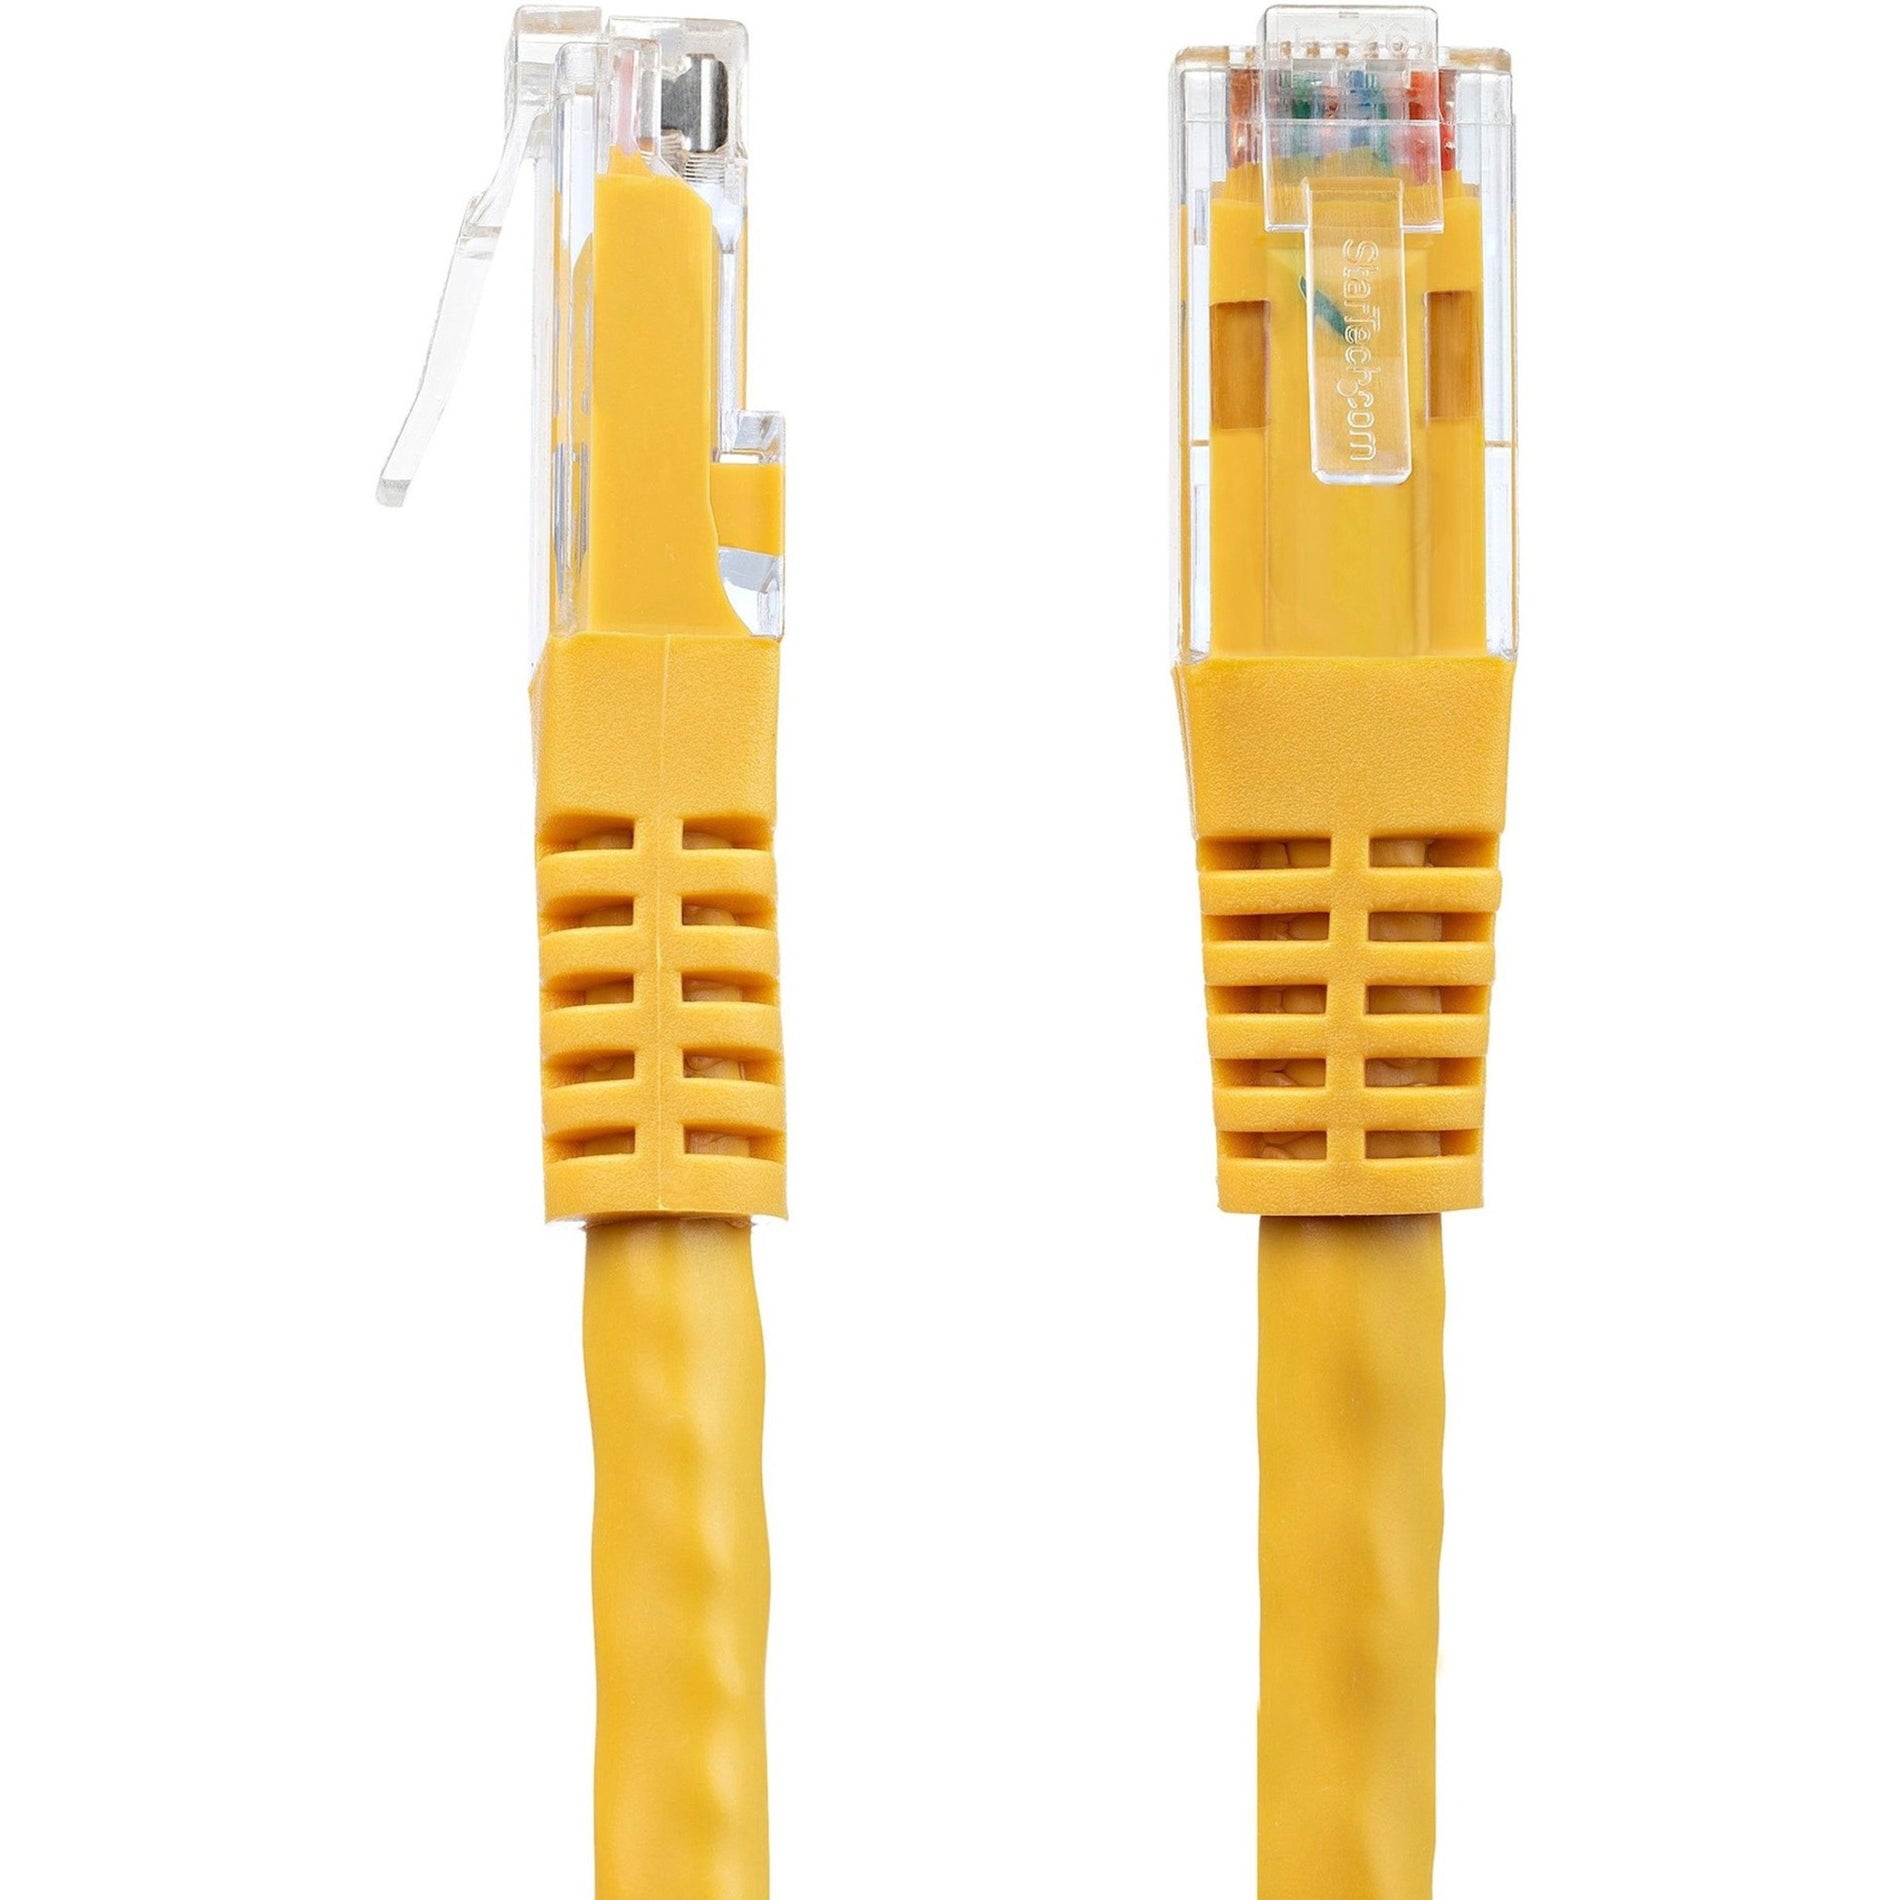 StarTech.com C6PATCH10YL 10ft Yellow Cat6 UTP Patch Cable ETL Verified, Molded, PoE, Strain Relief, Damage Resistant, Corrosion Resistant